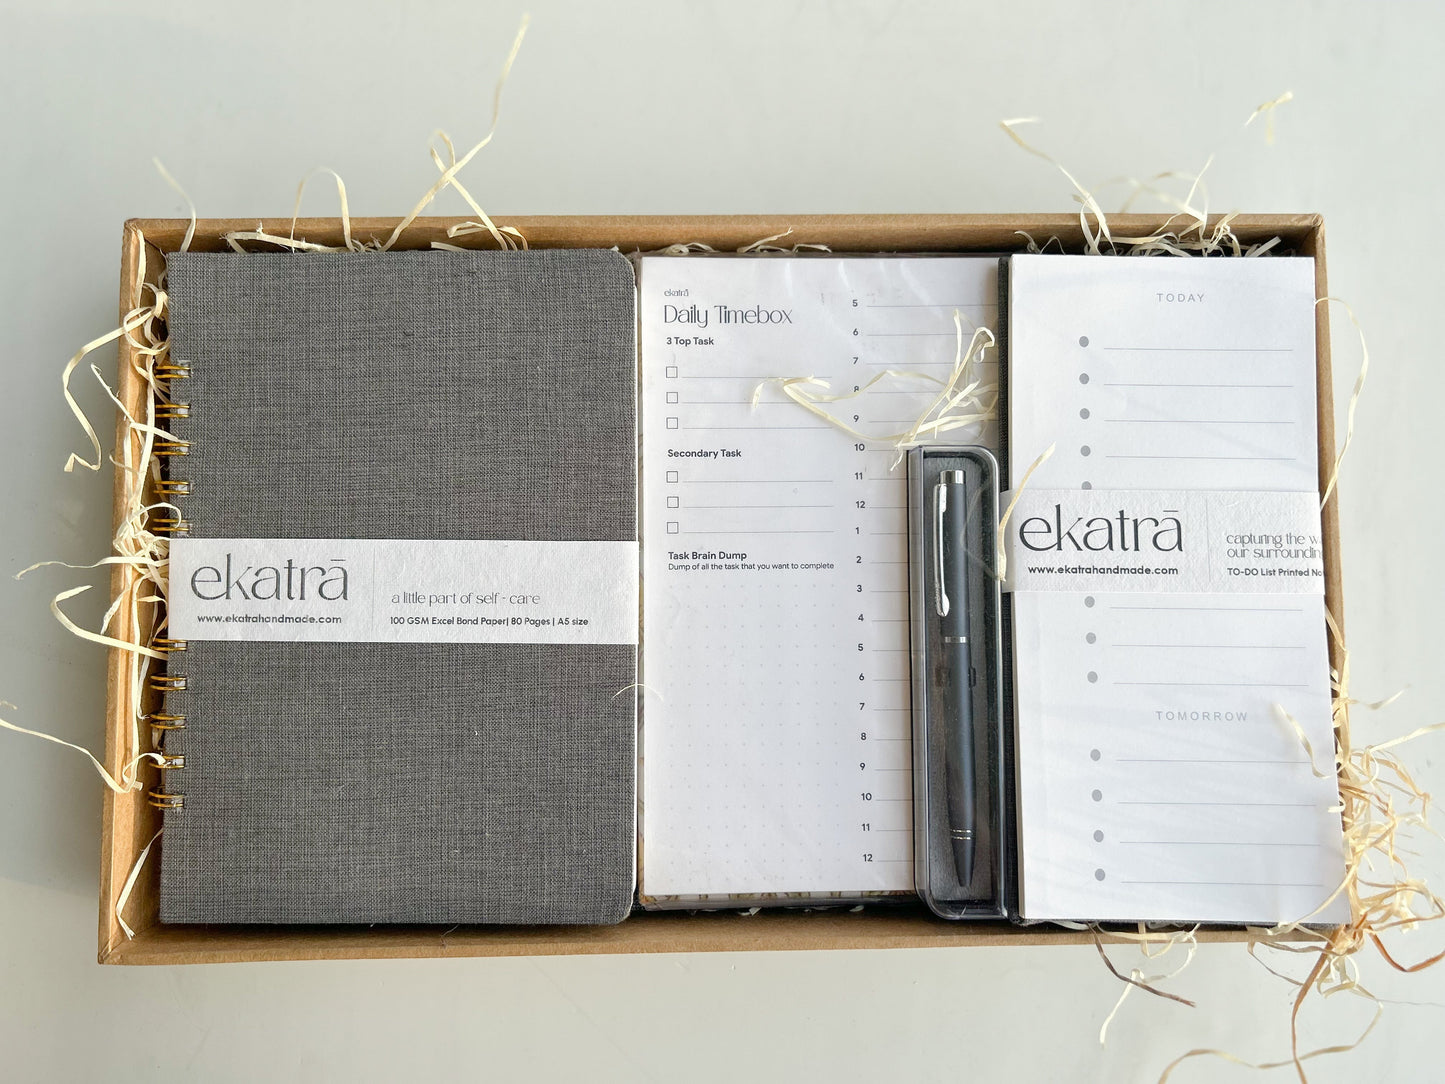 Ekatra Premium Corporate Gift set -  Time management